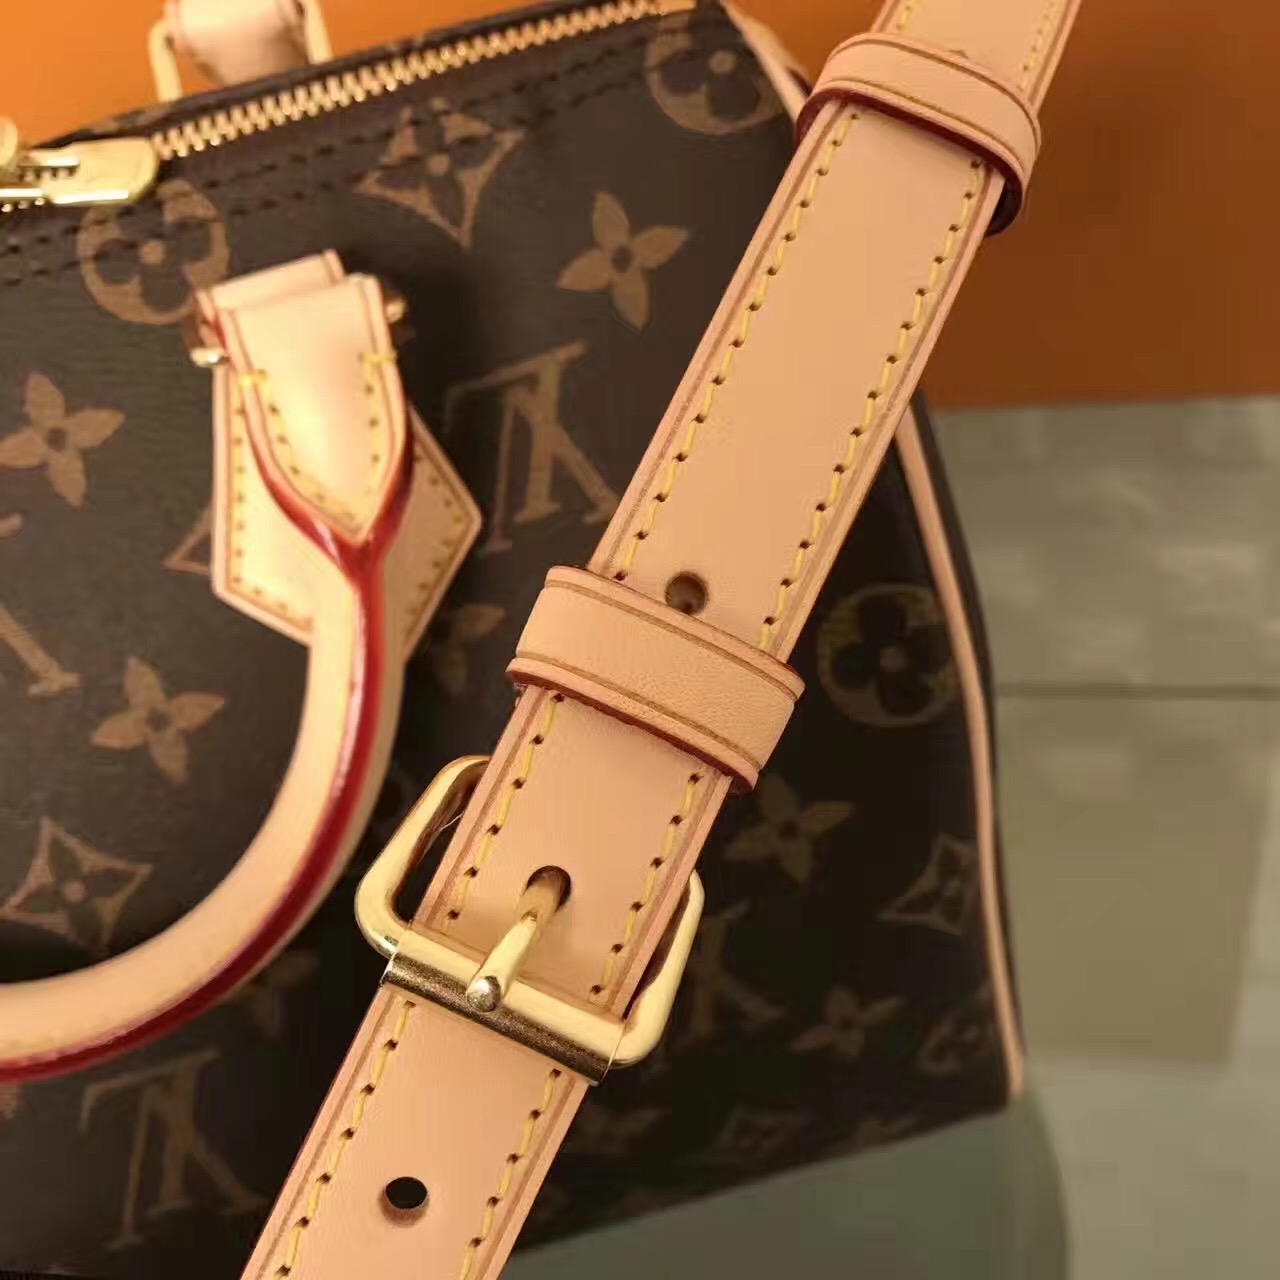 LV Louis Vuitton 25cm monogram speedy shoulder handbags